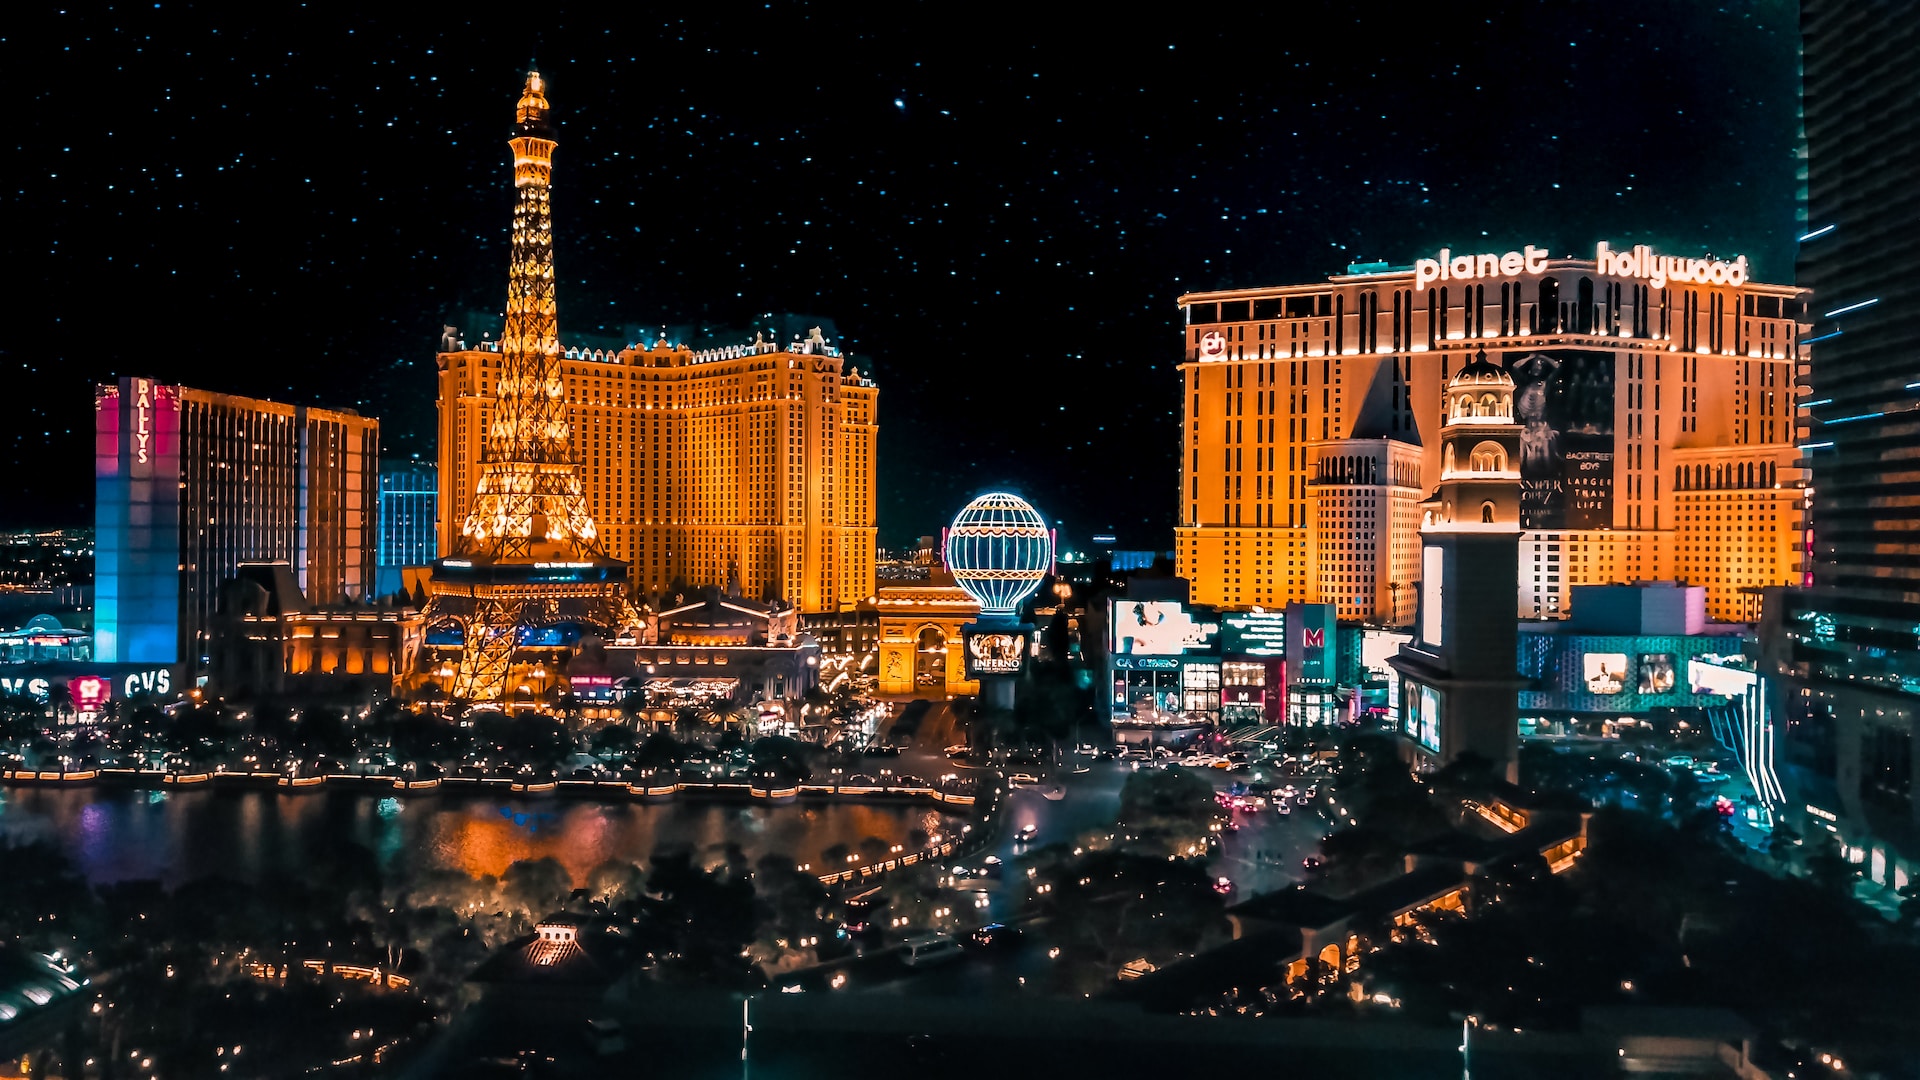 Planet Hollywood Las Vegas 2020 